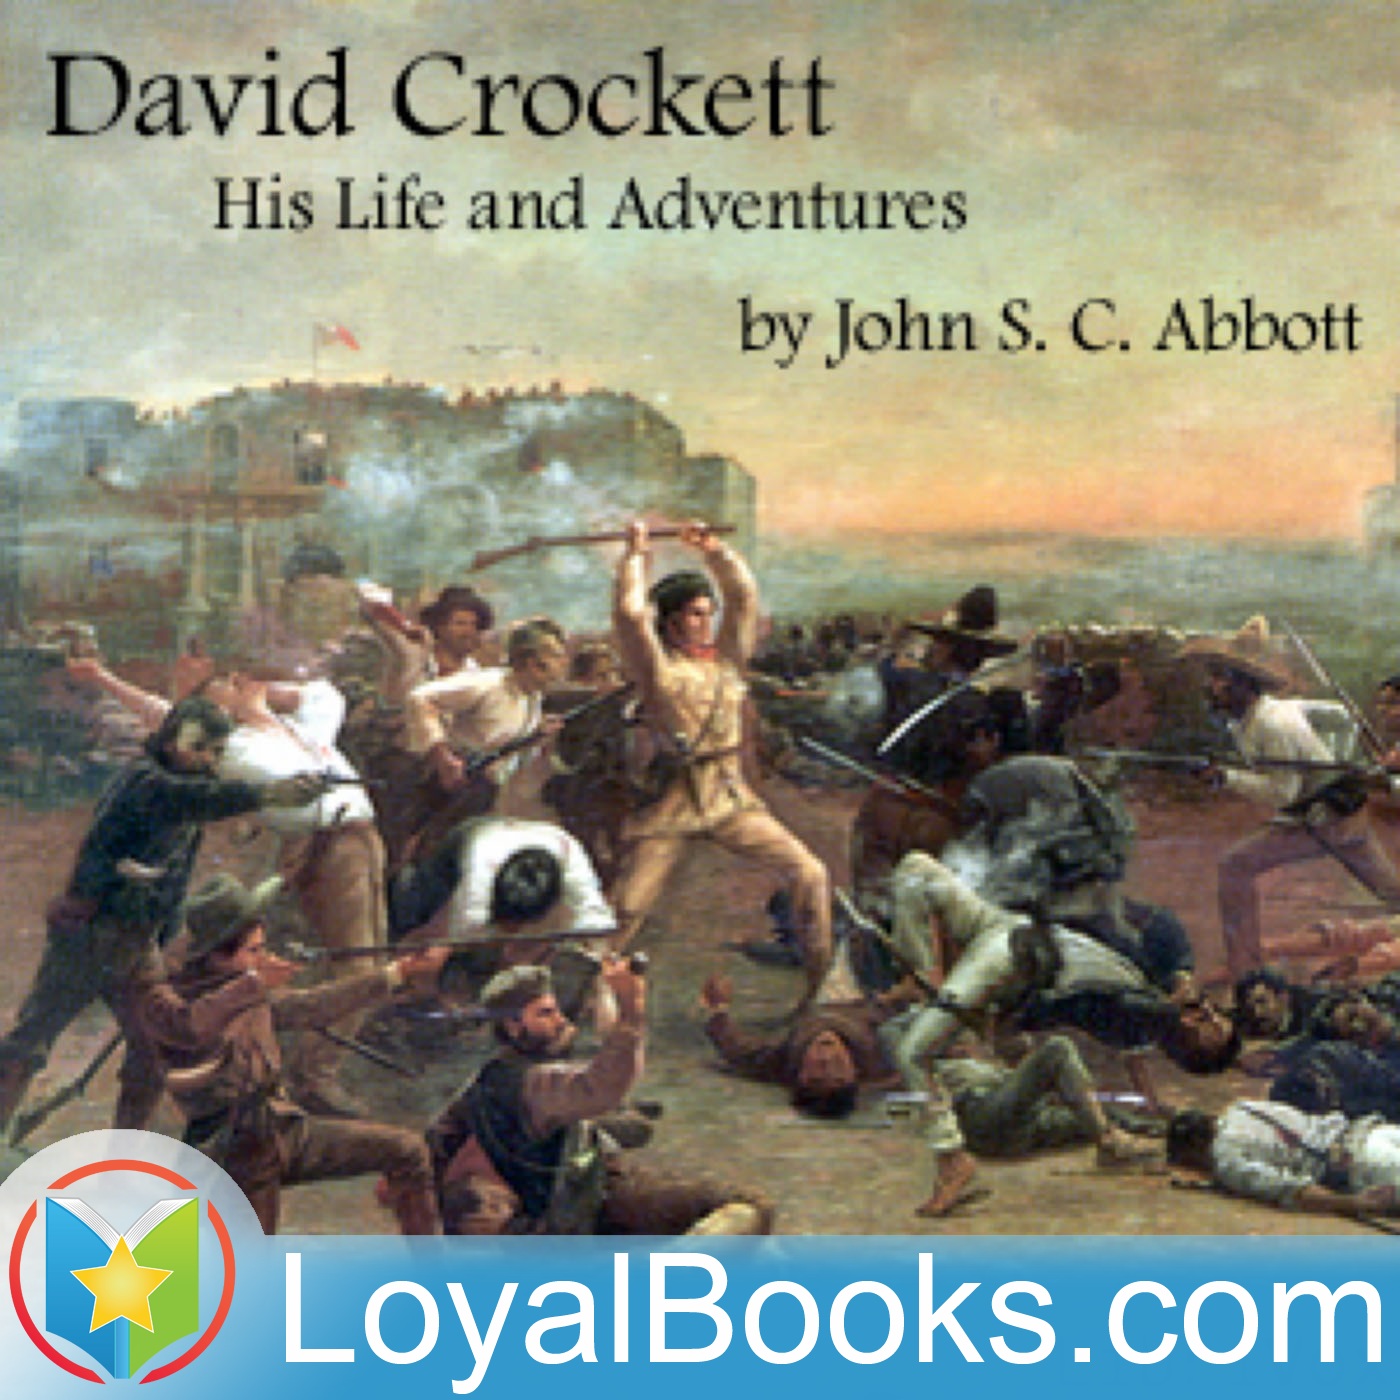 David Crockett: His Life and Adventures by John S. C. Abbott